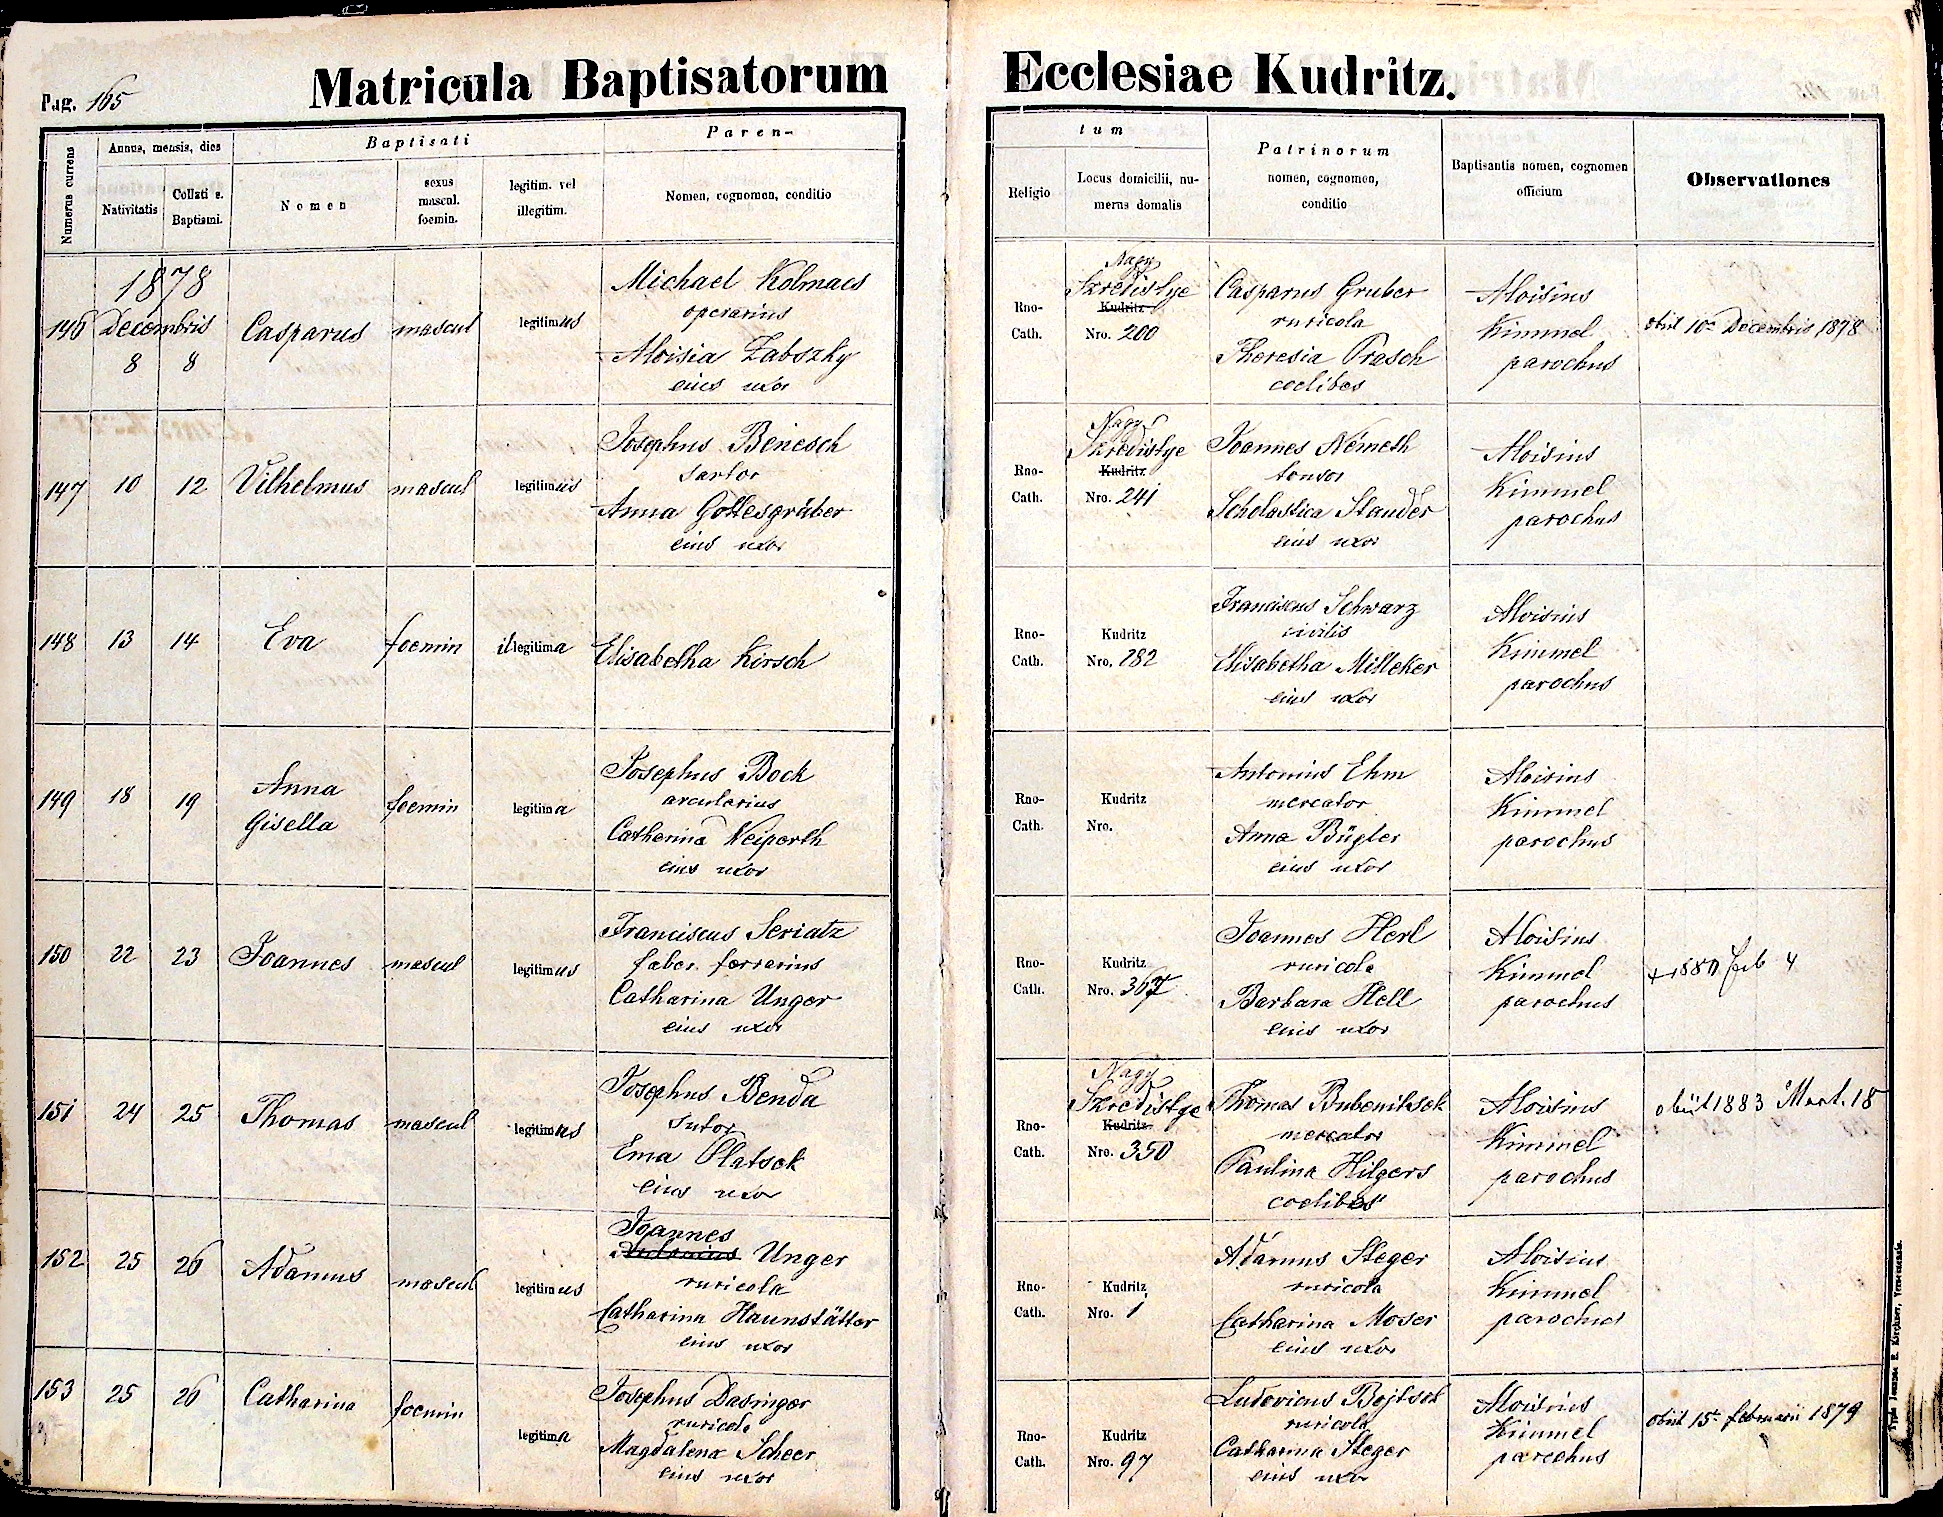 images/church_records/BIRTHS/1884-1899B/1895/165